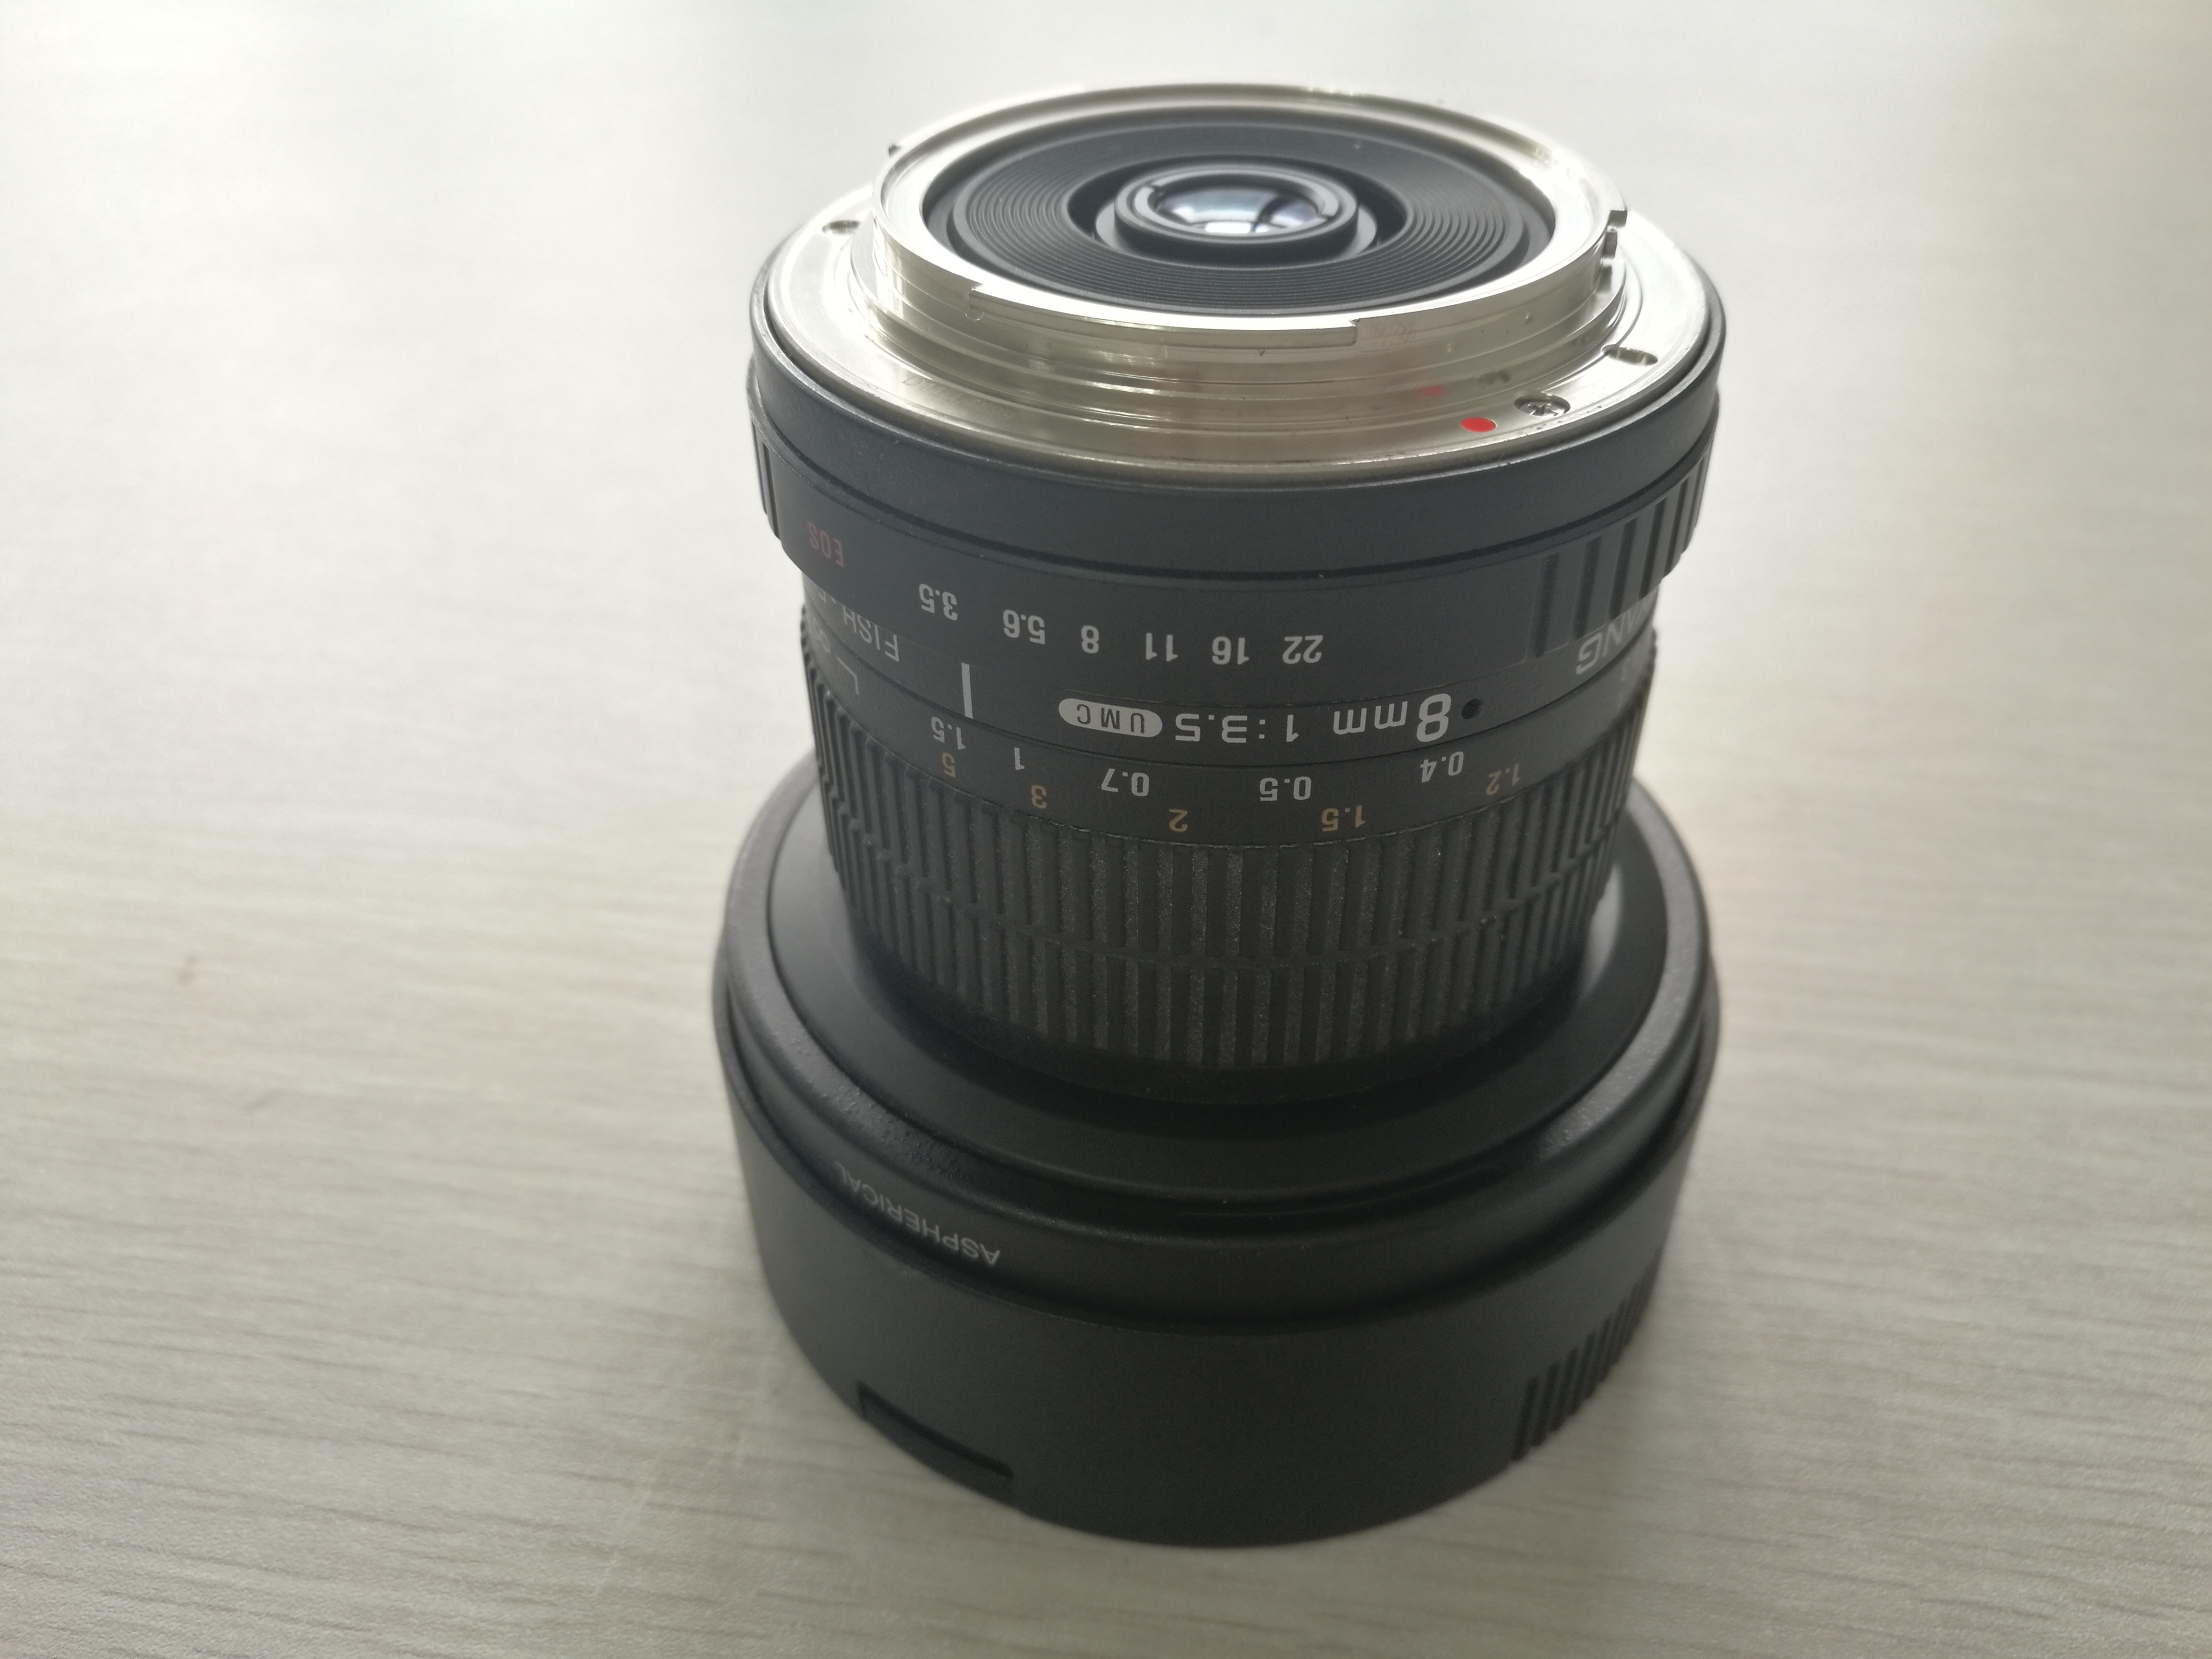  Sanyang fisheye lens sold